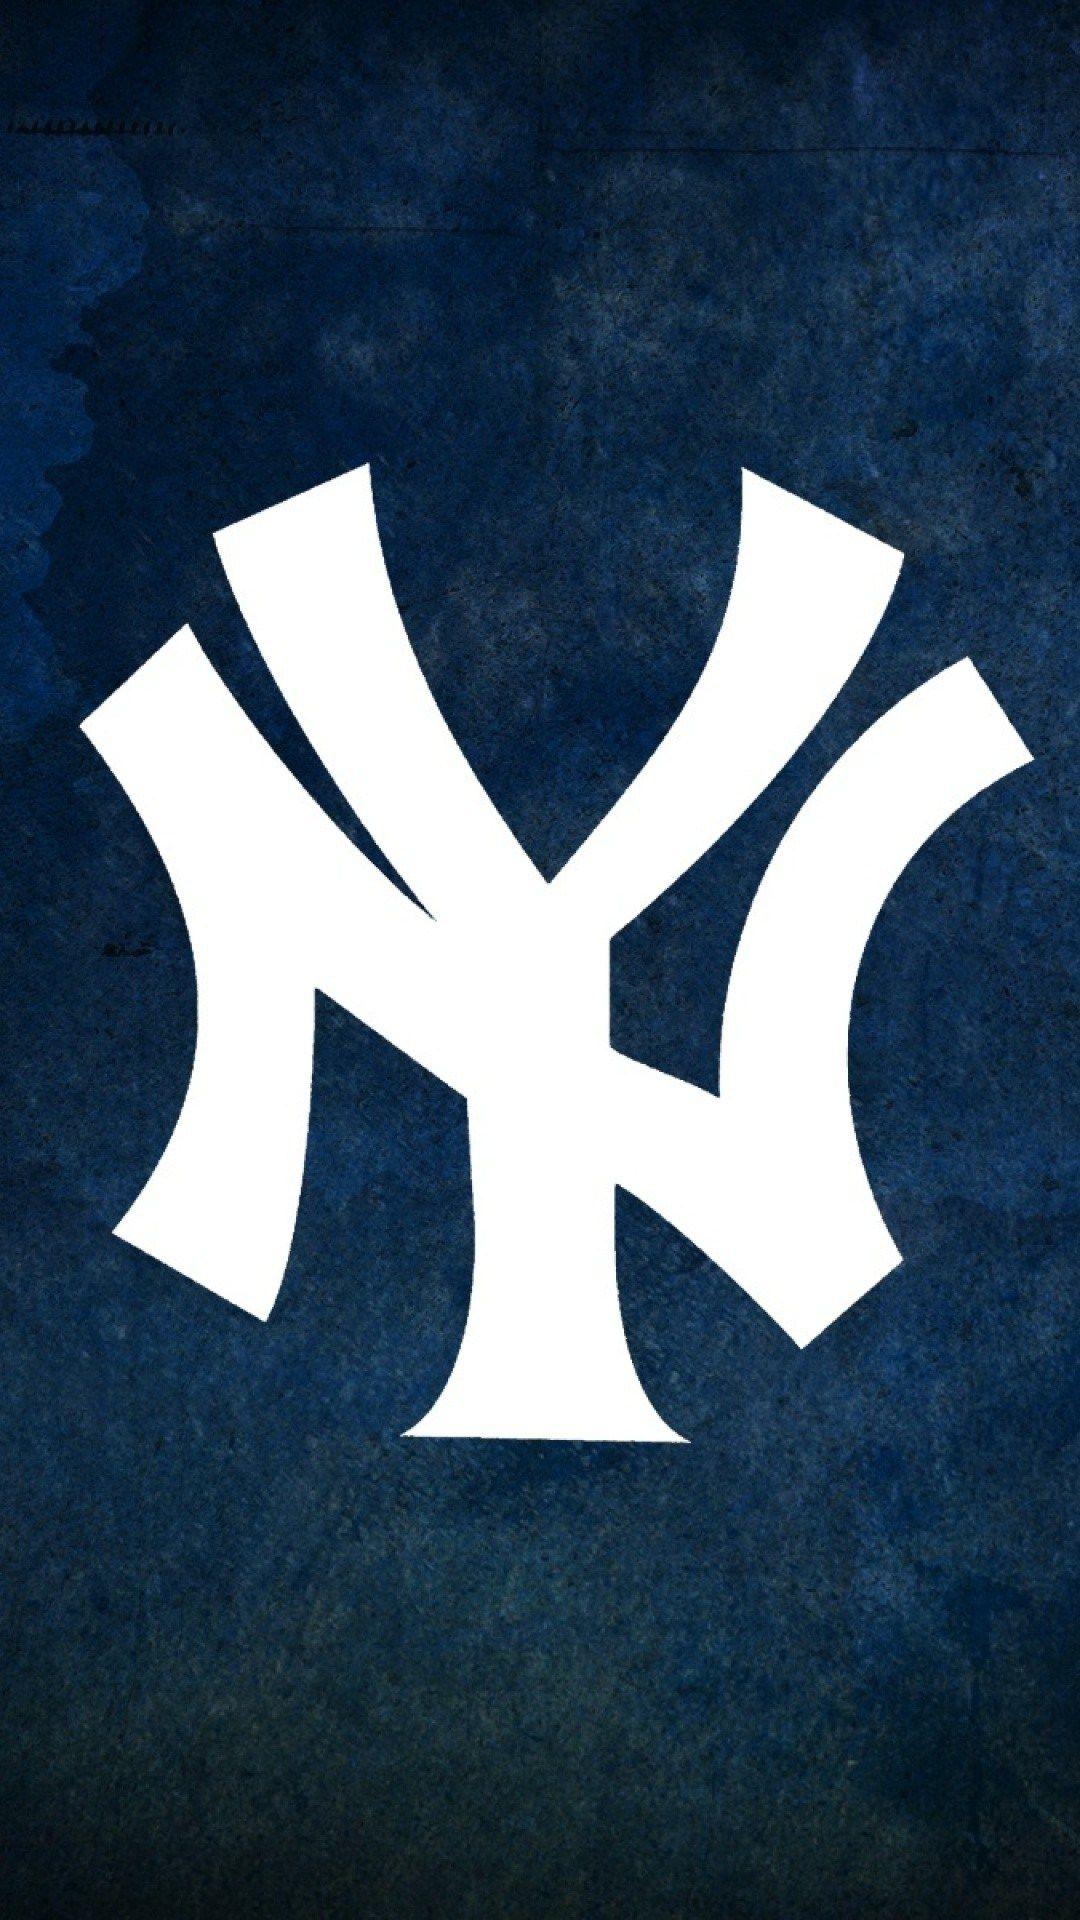 Beautiful New York Yankees Wallpaper iPhone